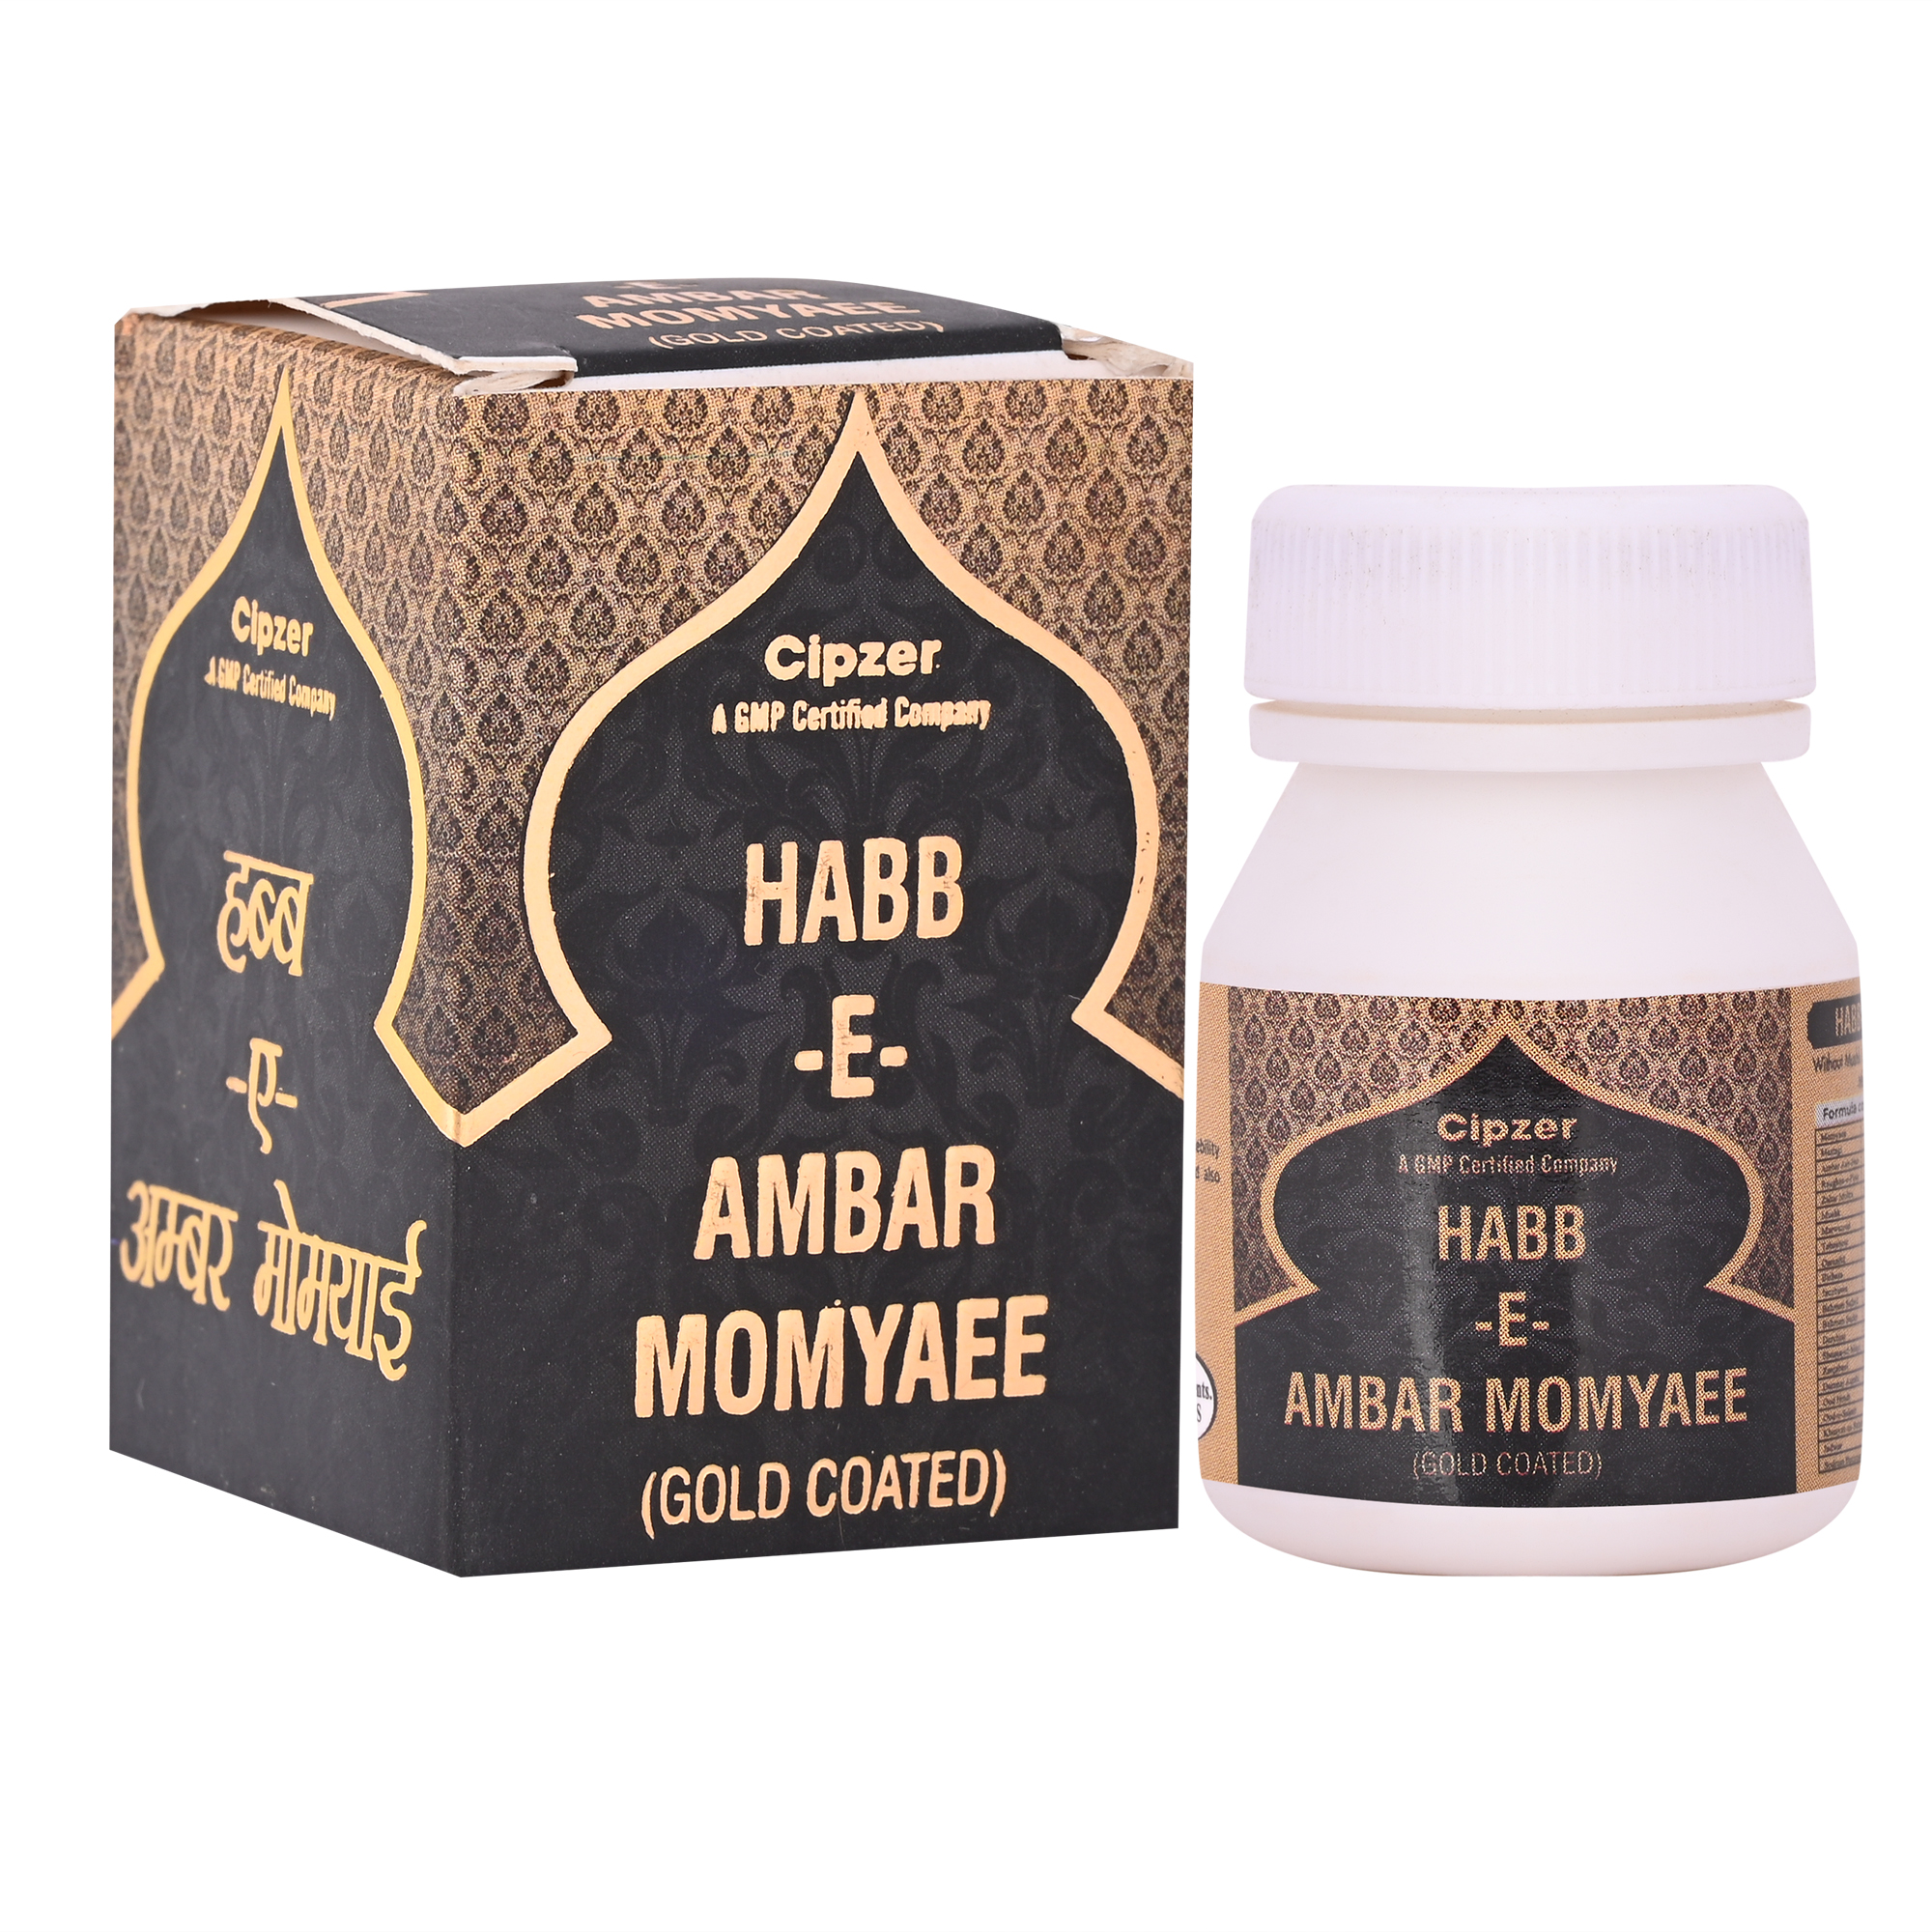 Buy Cipzer Habbe Amber Momyaee Gold at Best Price Online